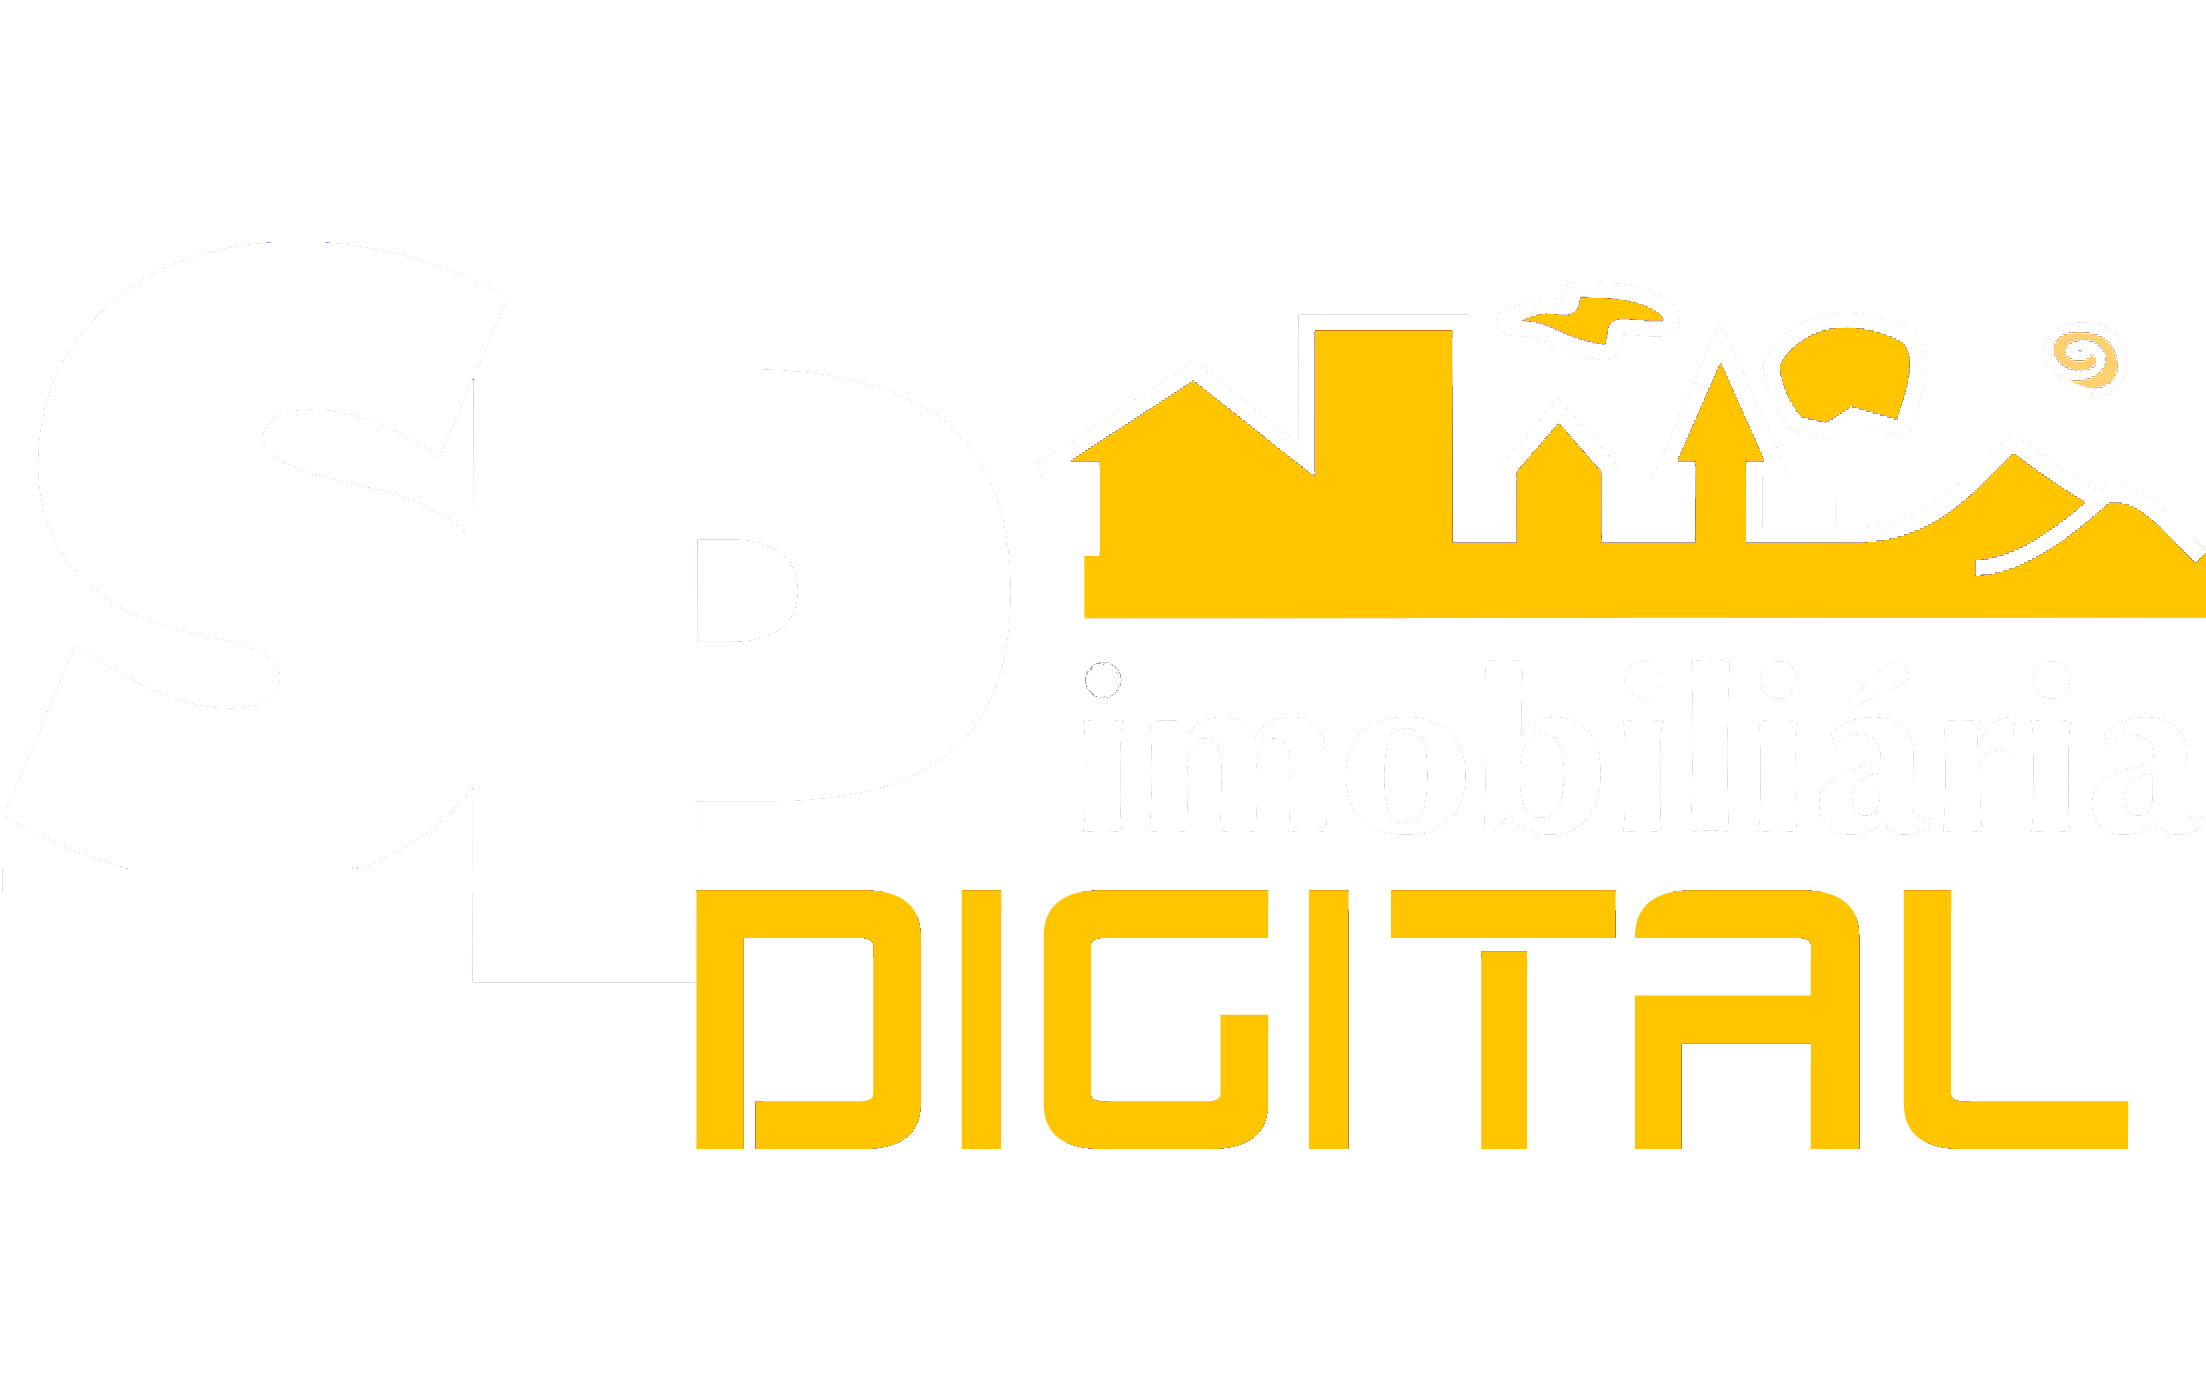 SP Digital